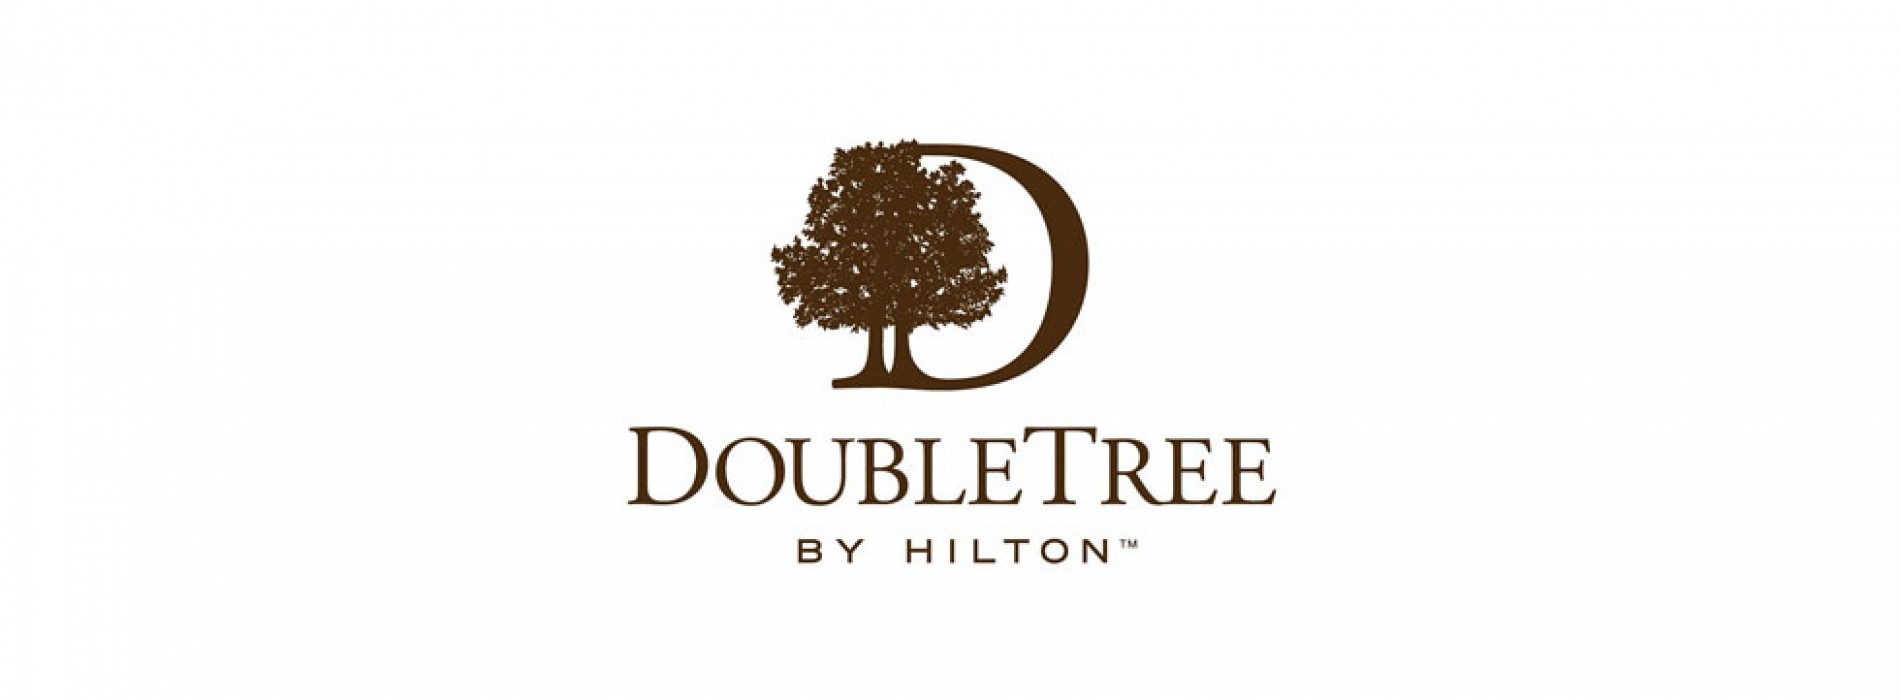 DoubleTree by Hilton opens new hotel in London